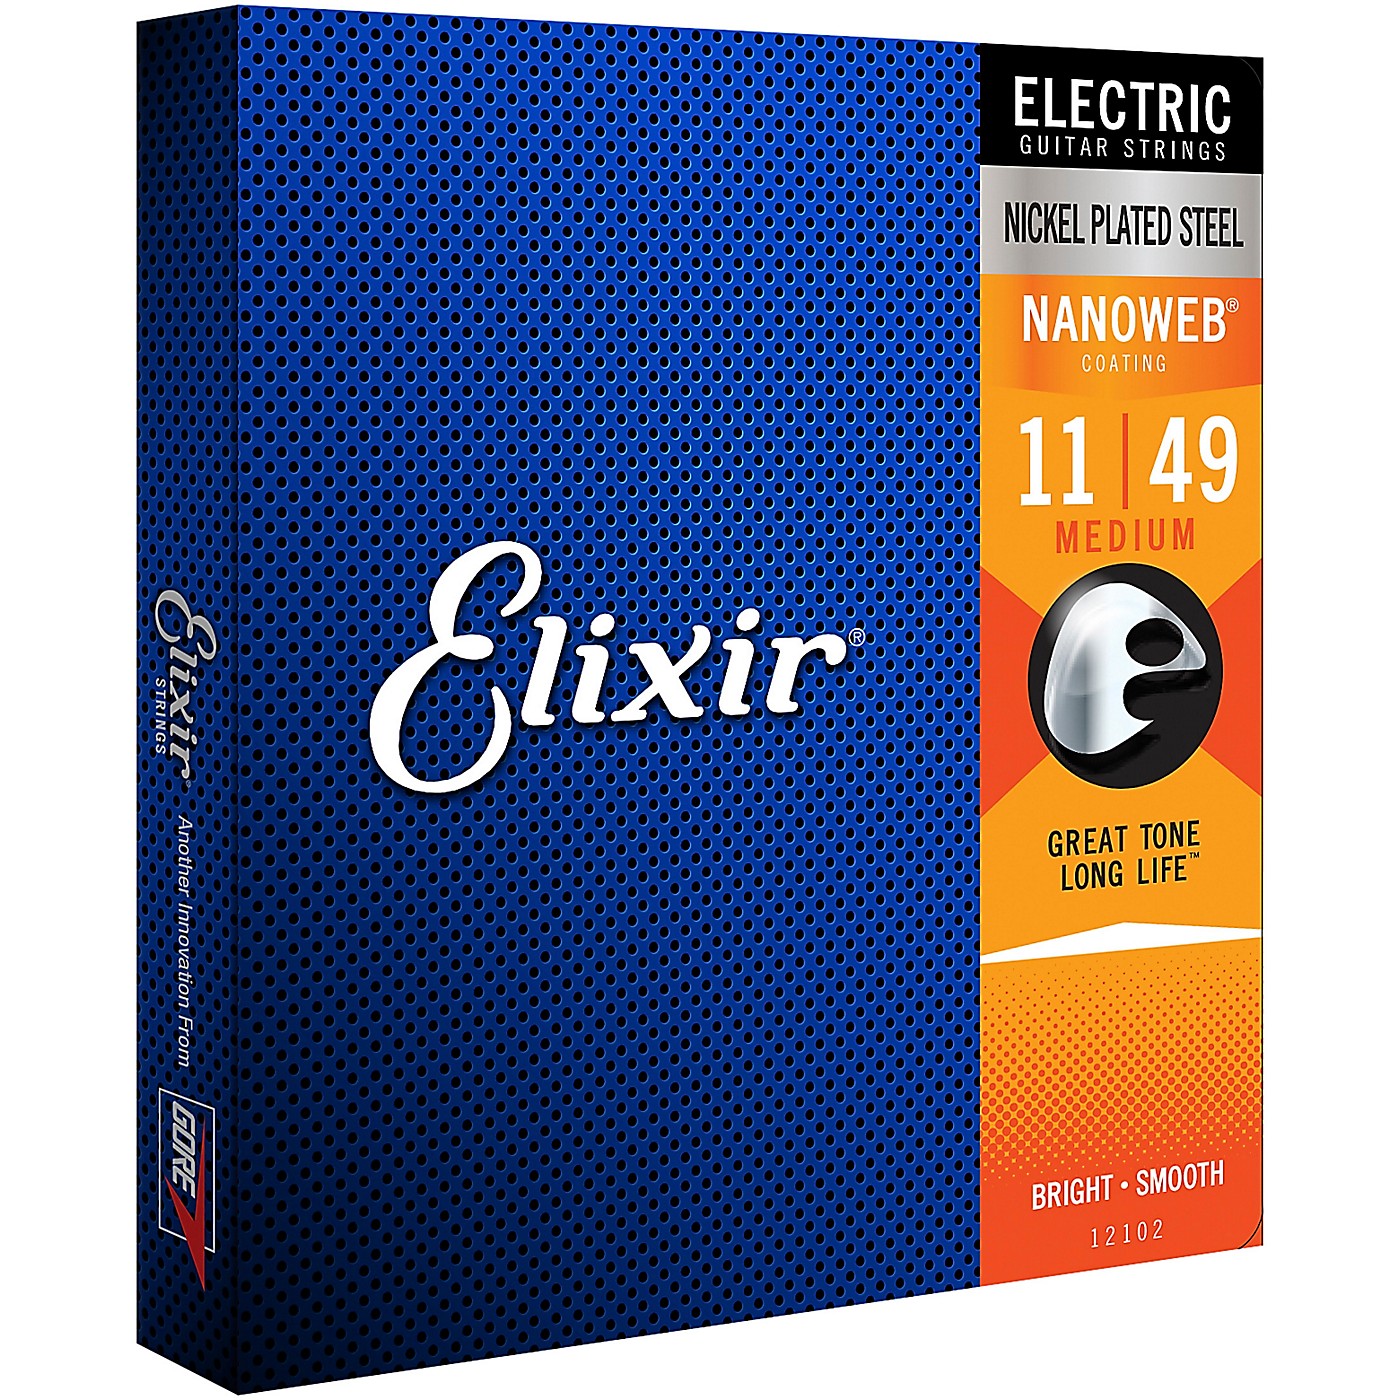 Elixir Electric Guitar Strings with NANOWEB Coating, Medium (.011-.049) thumbnail